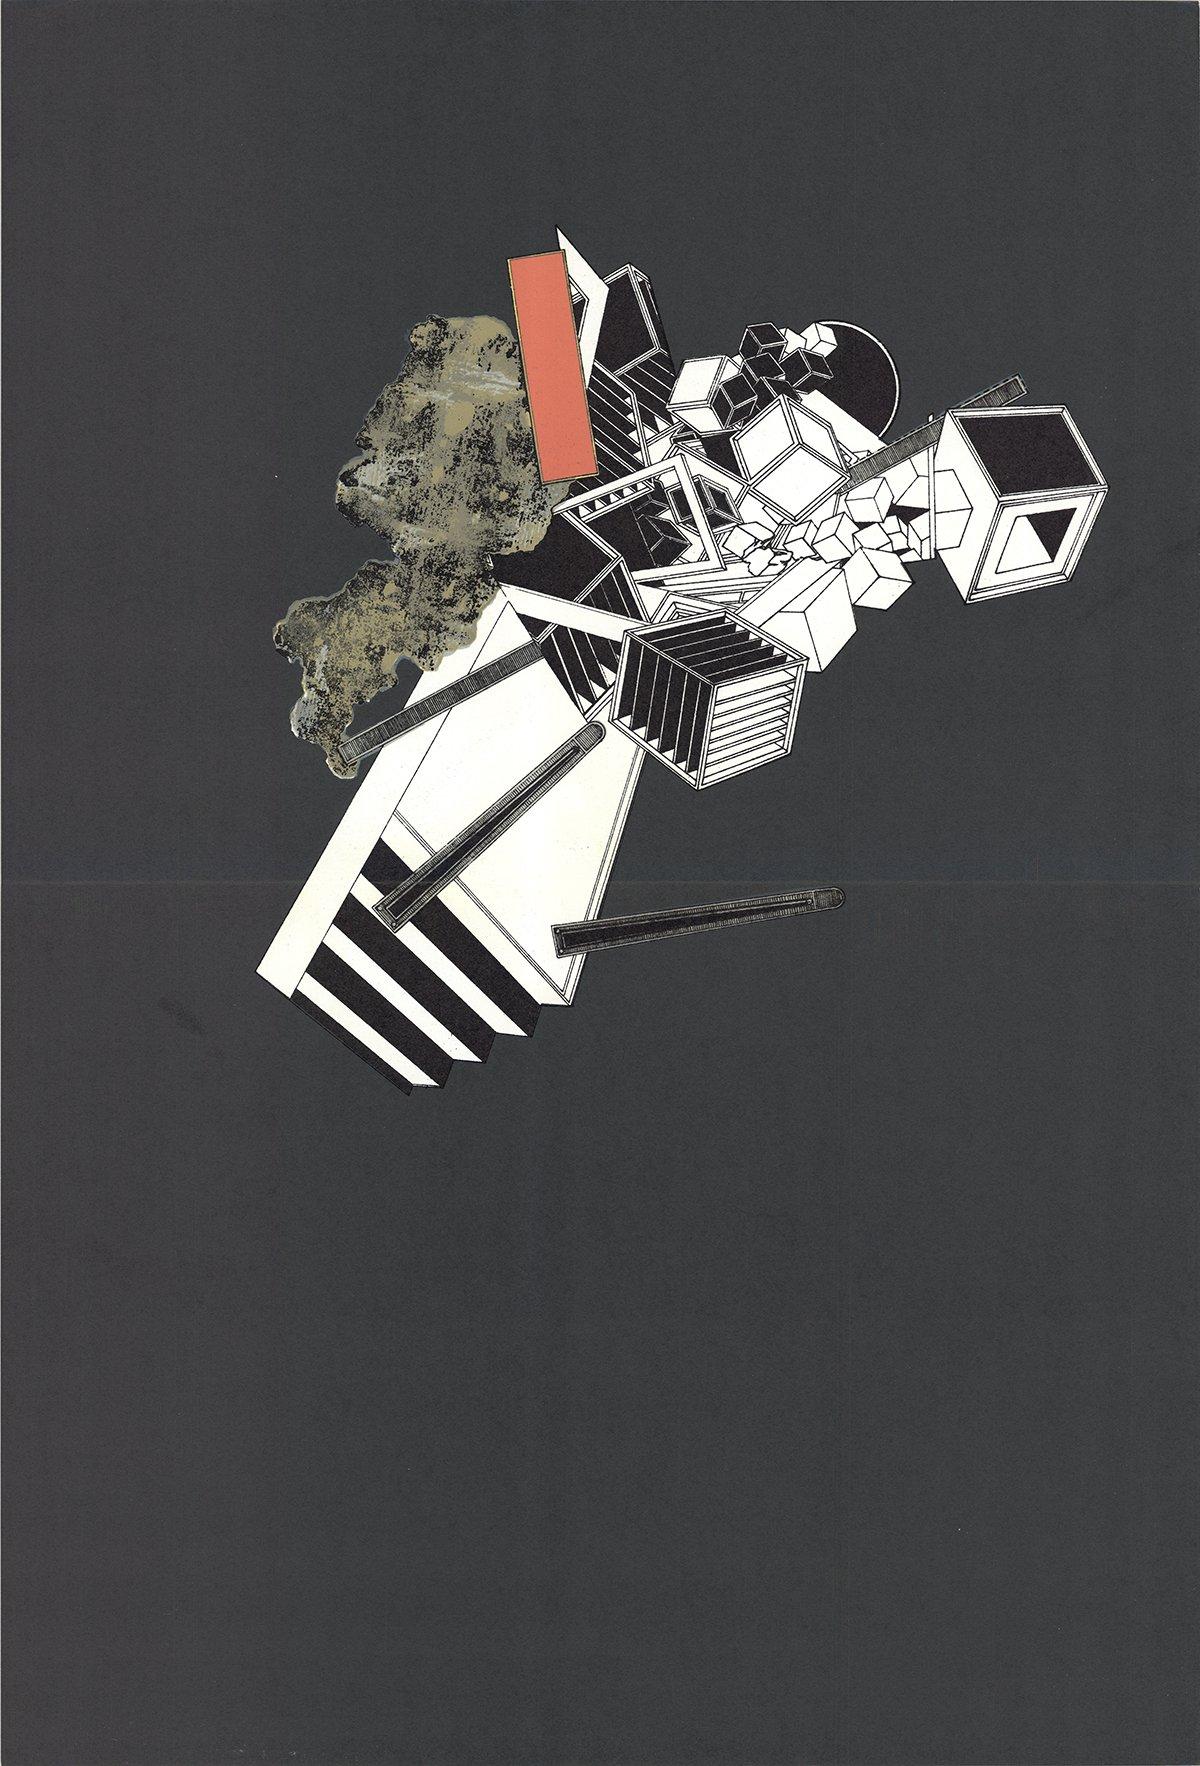 1969 Alain Le Yaouanc 'Geometric Study on Black' Surrealism Gray, White, Black